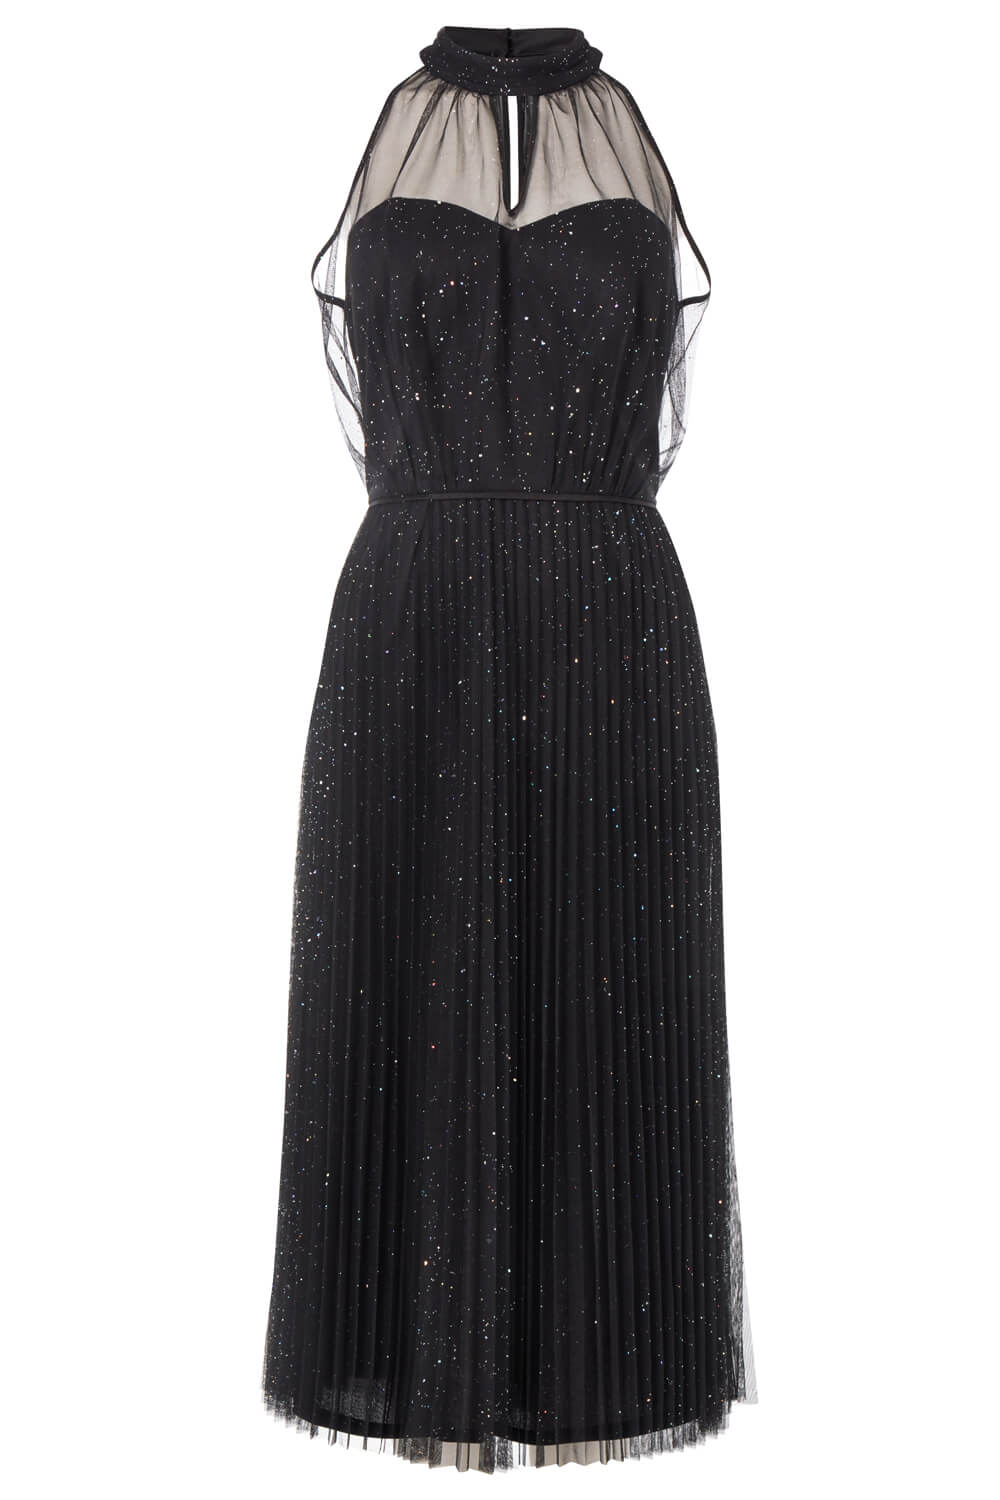 black sparkly halter neck dress